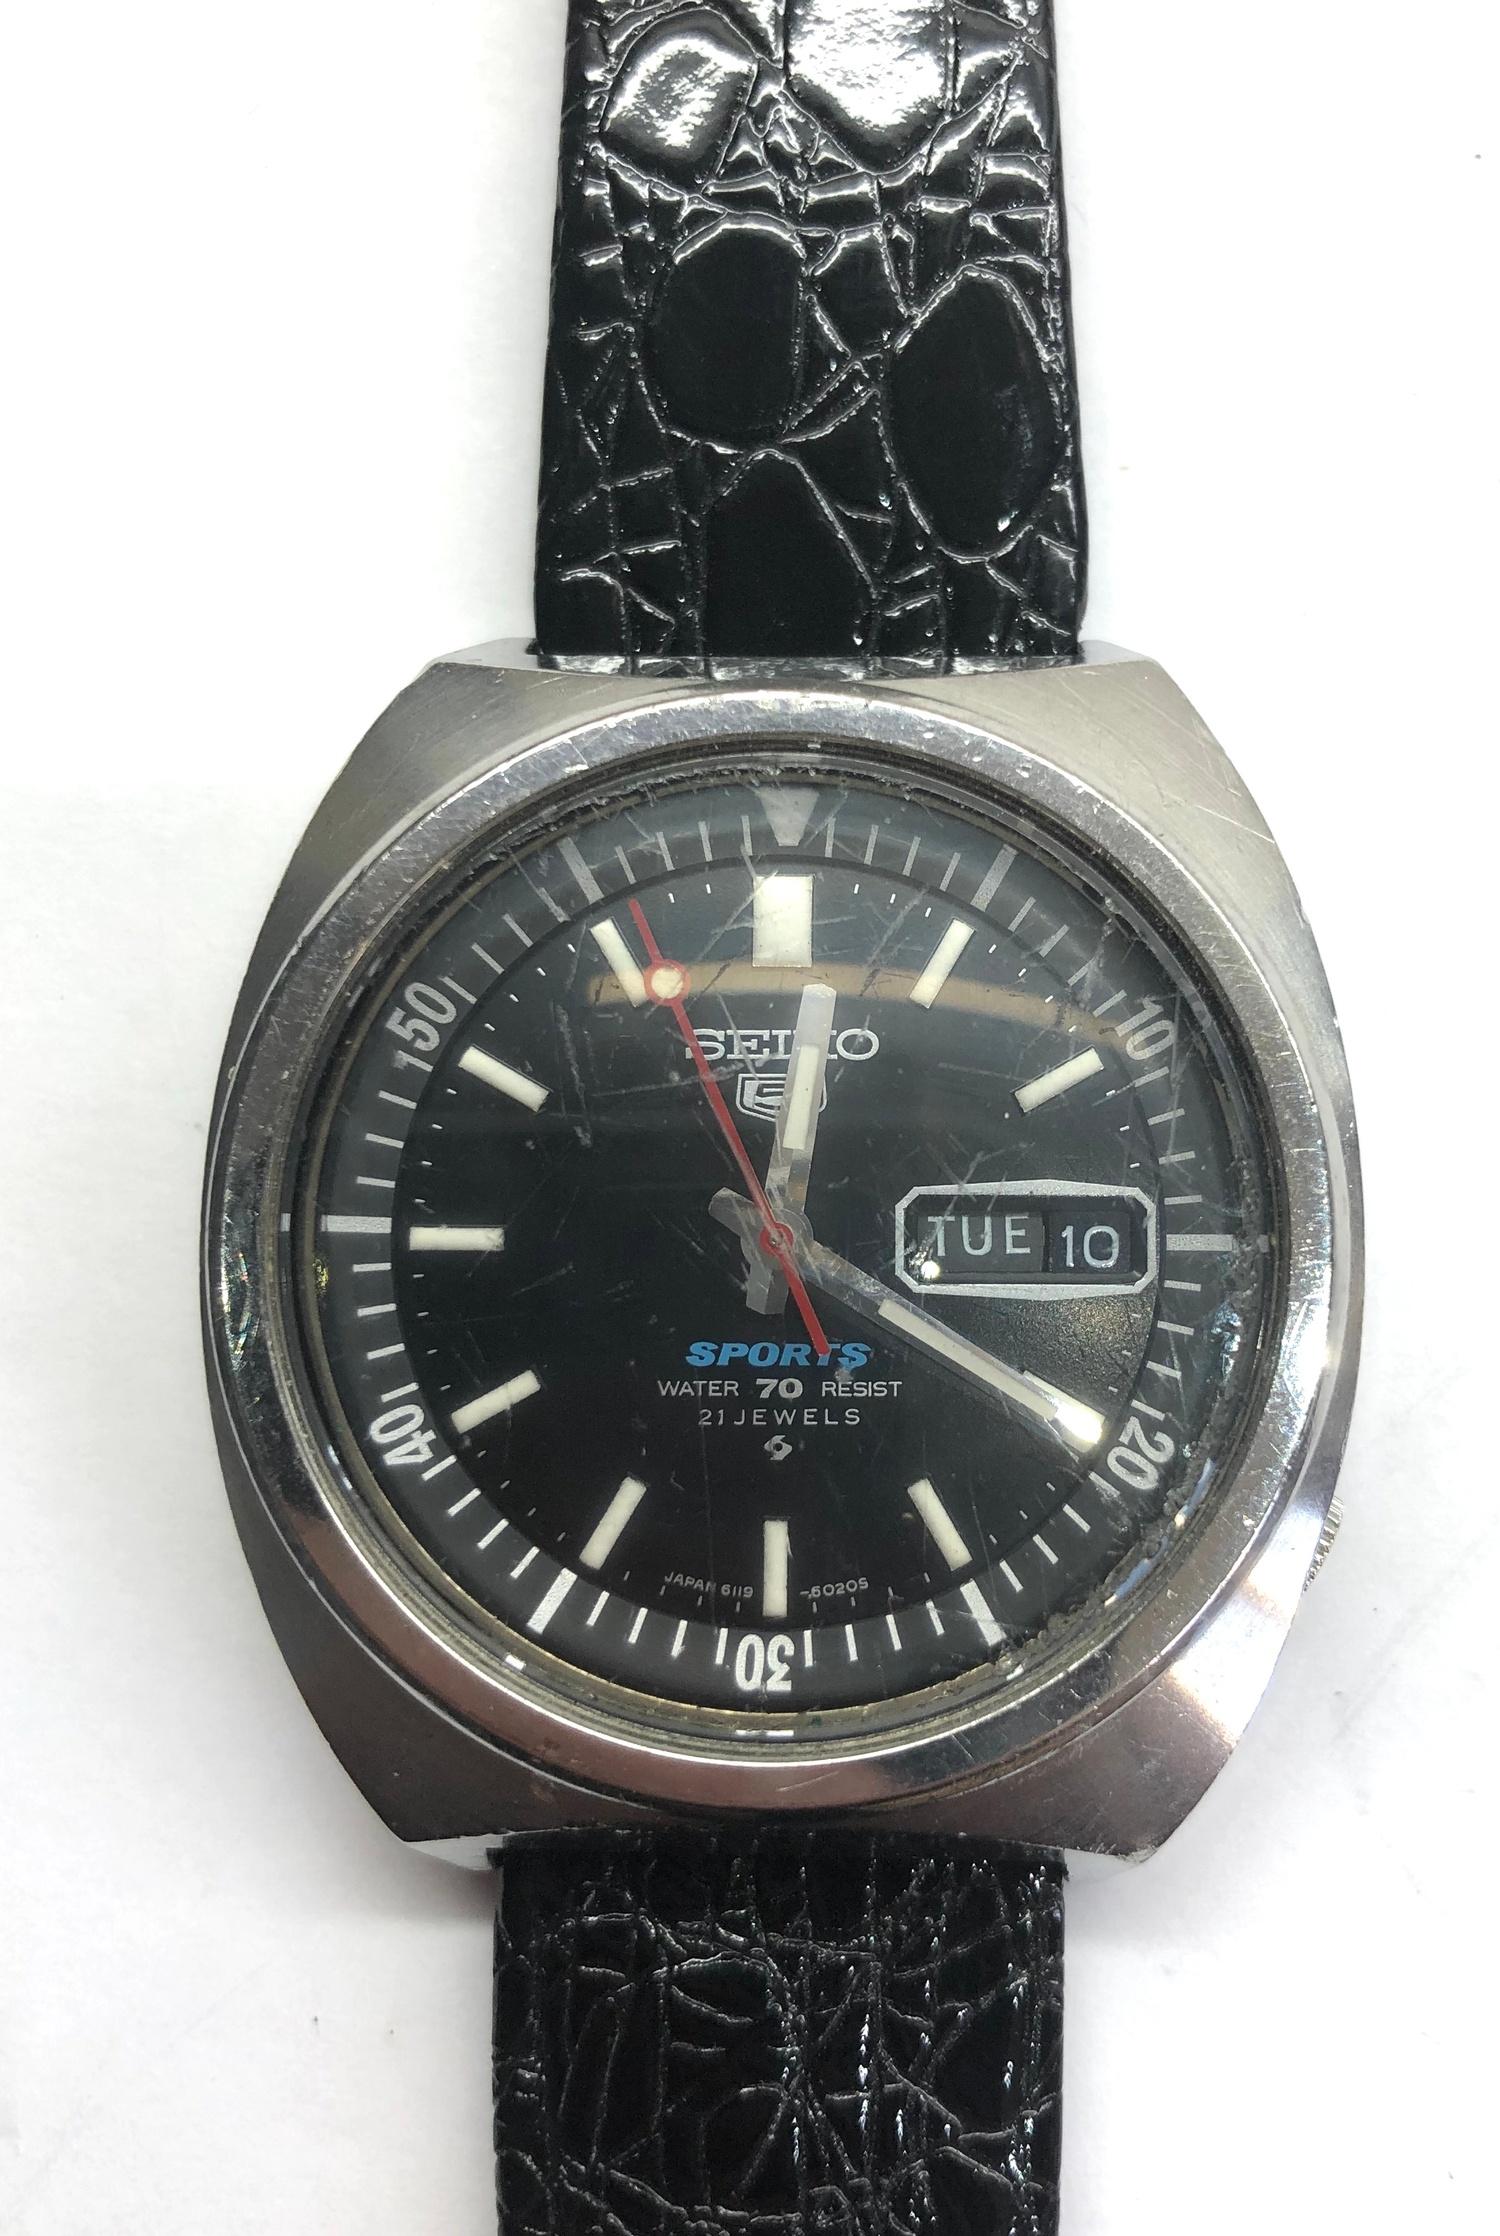 Seiko 5 sports 70m water resistant gents vintage s/steel wristwatch